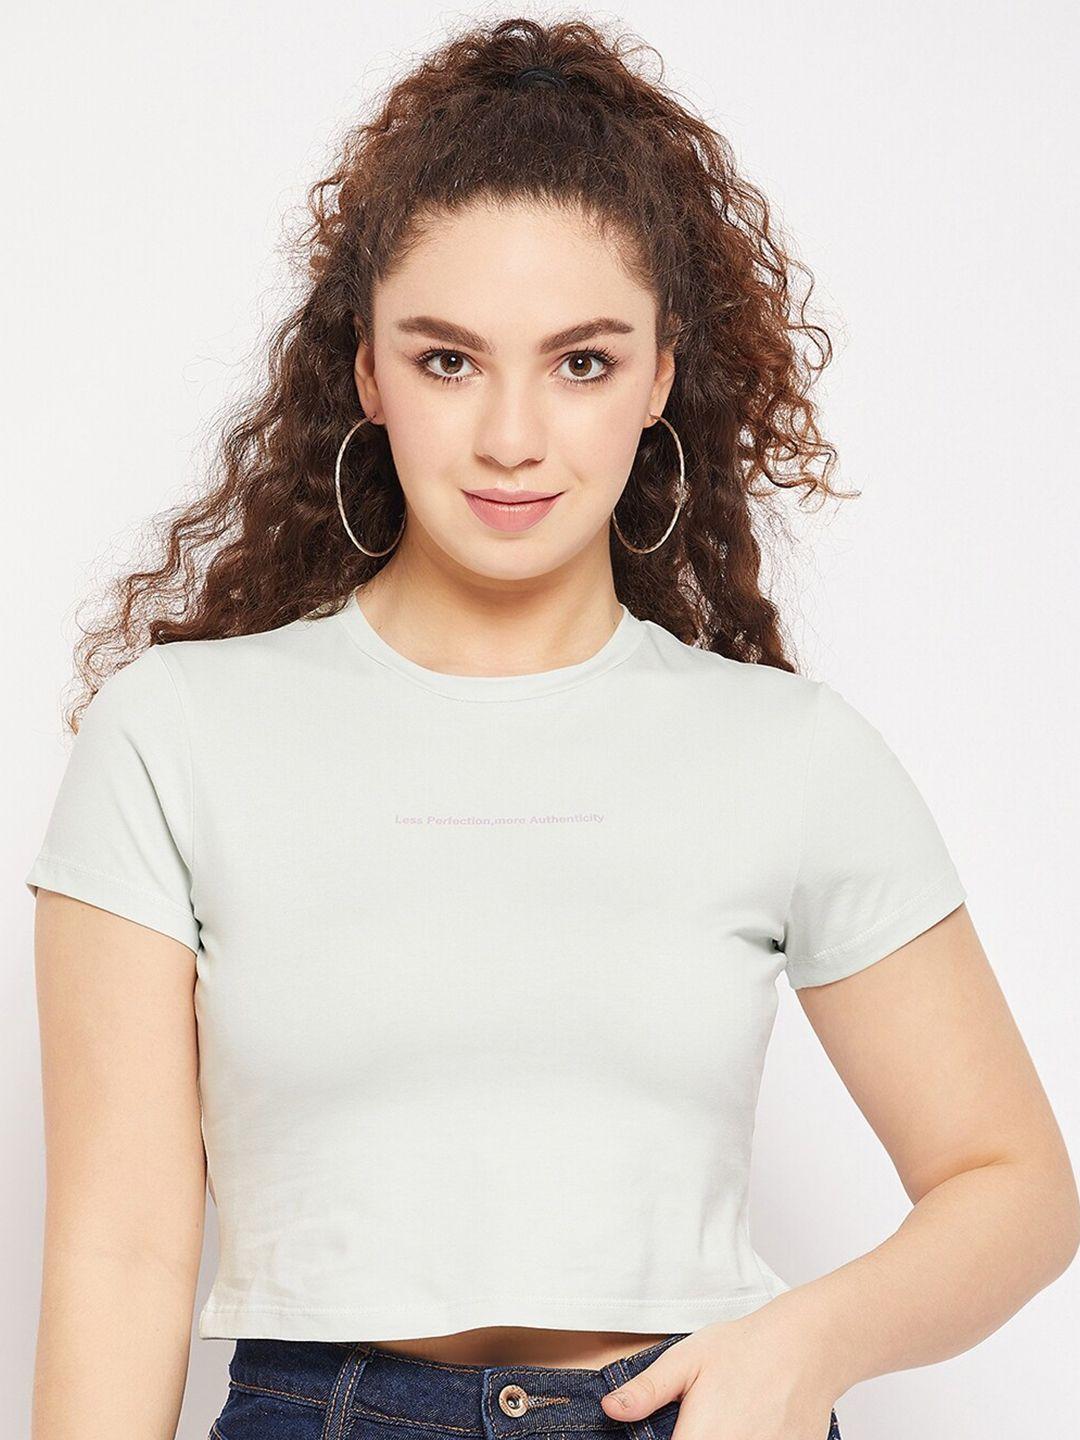 camla short sleeves typography printed cotton crop t-shirt